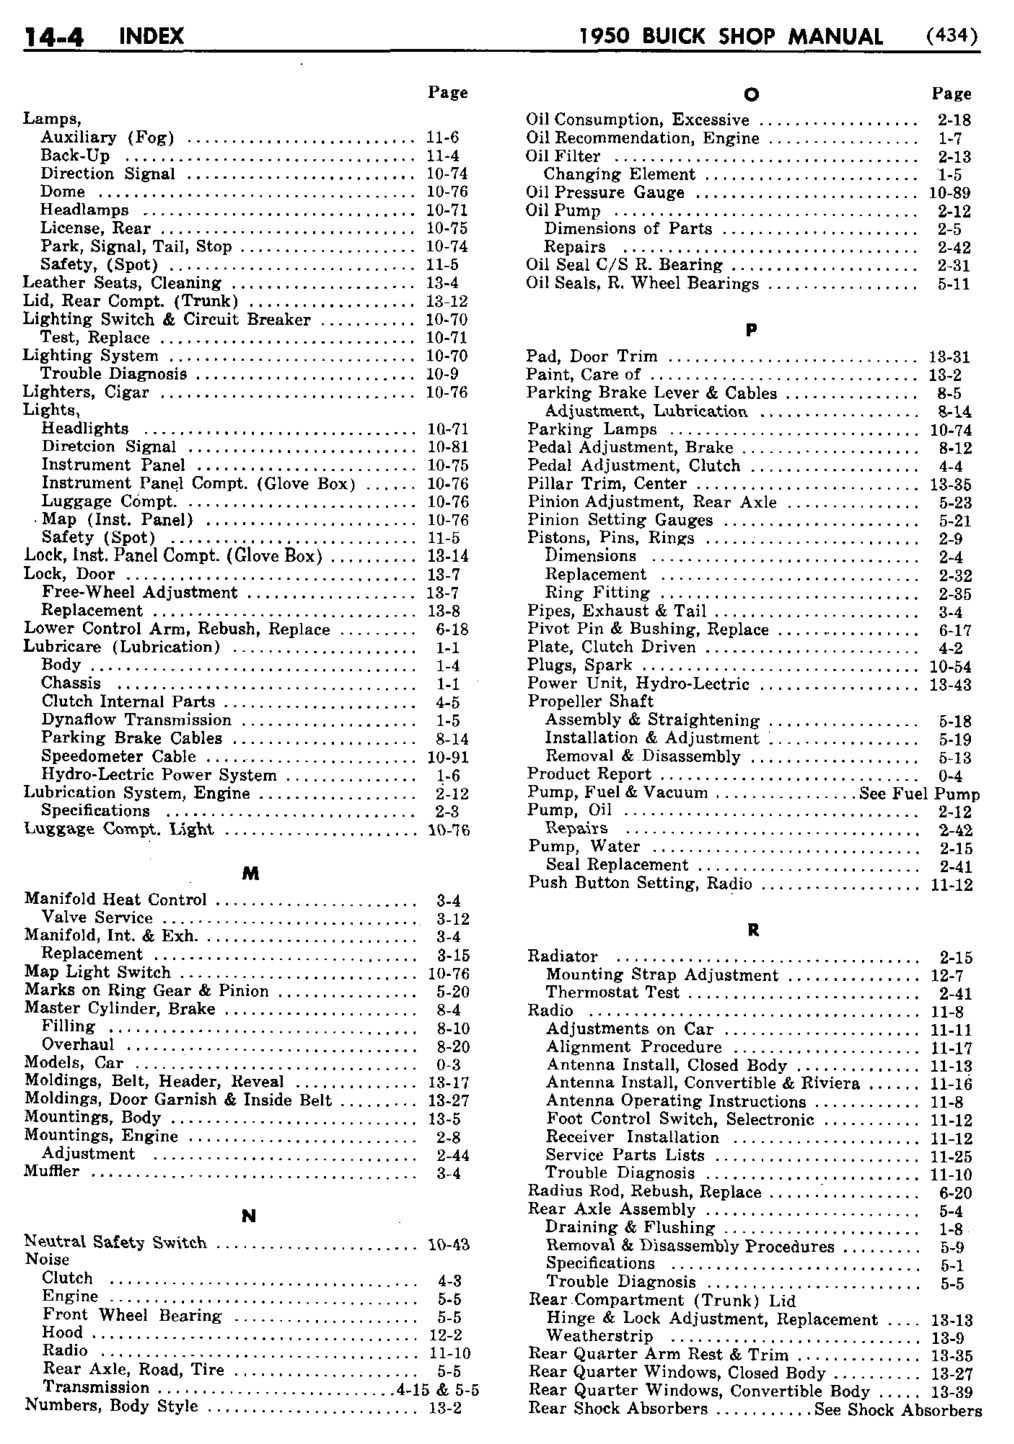 n_15 1950 Buick Shop Manual - Index-004-004.jpg